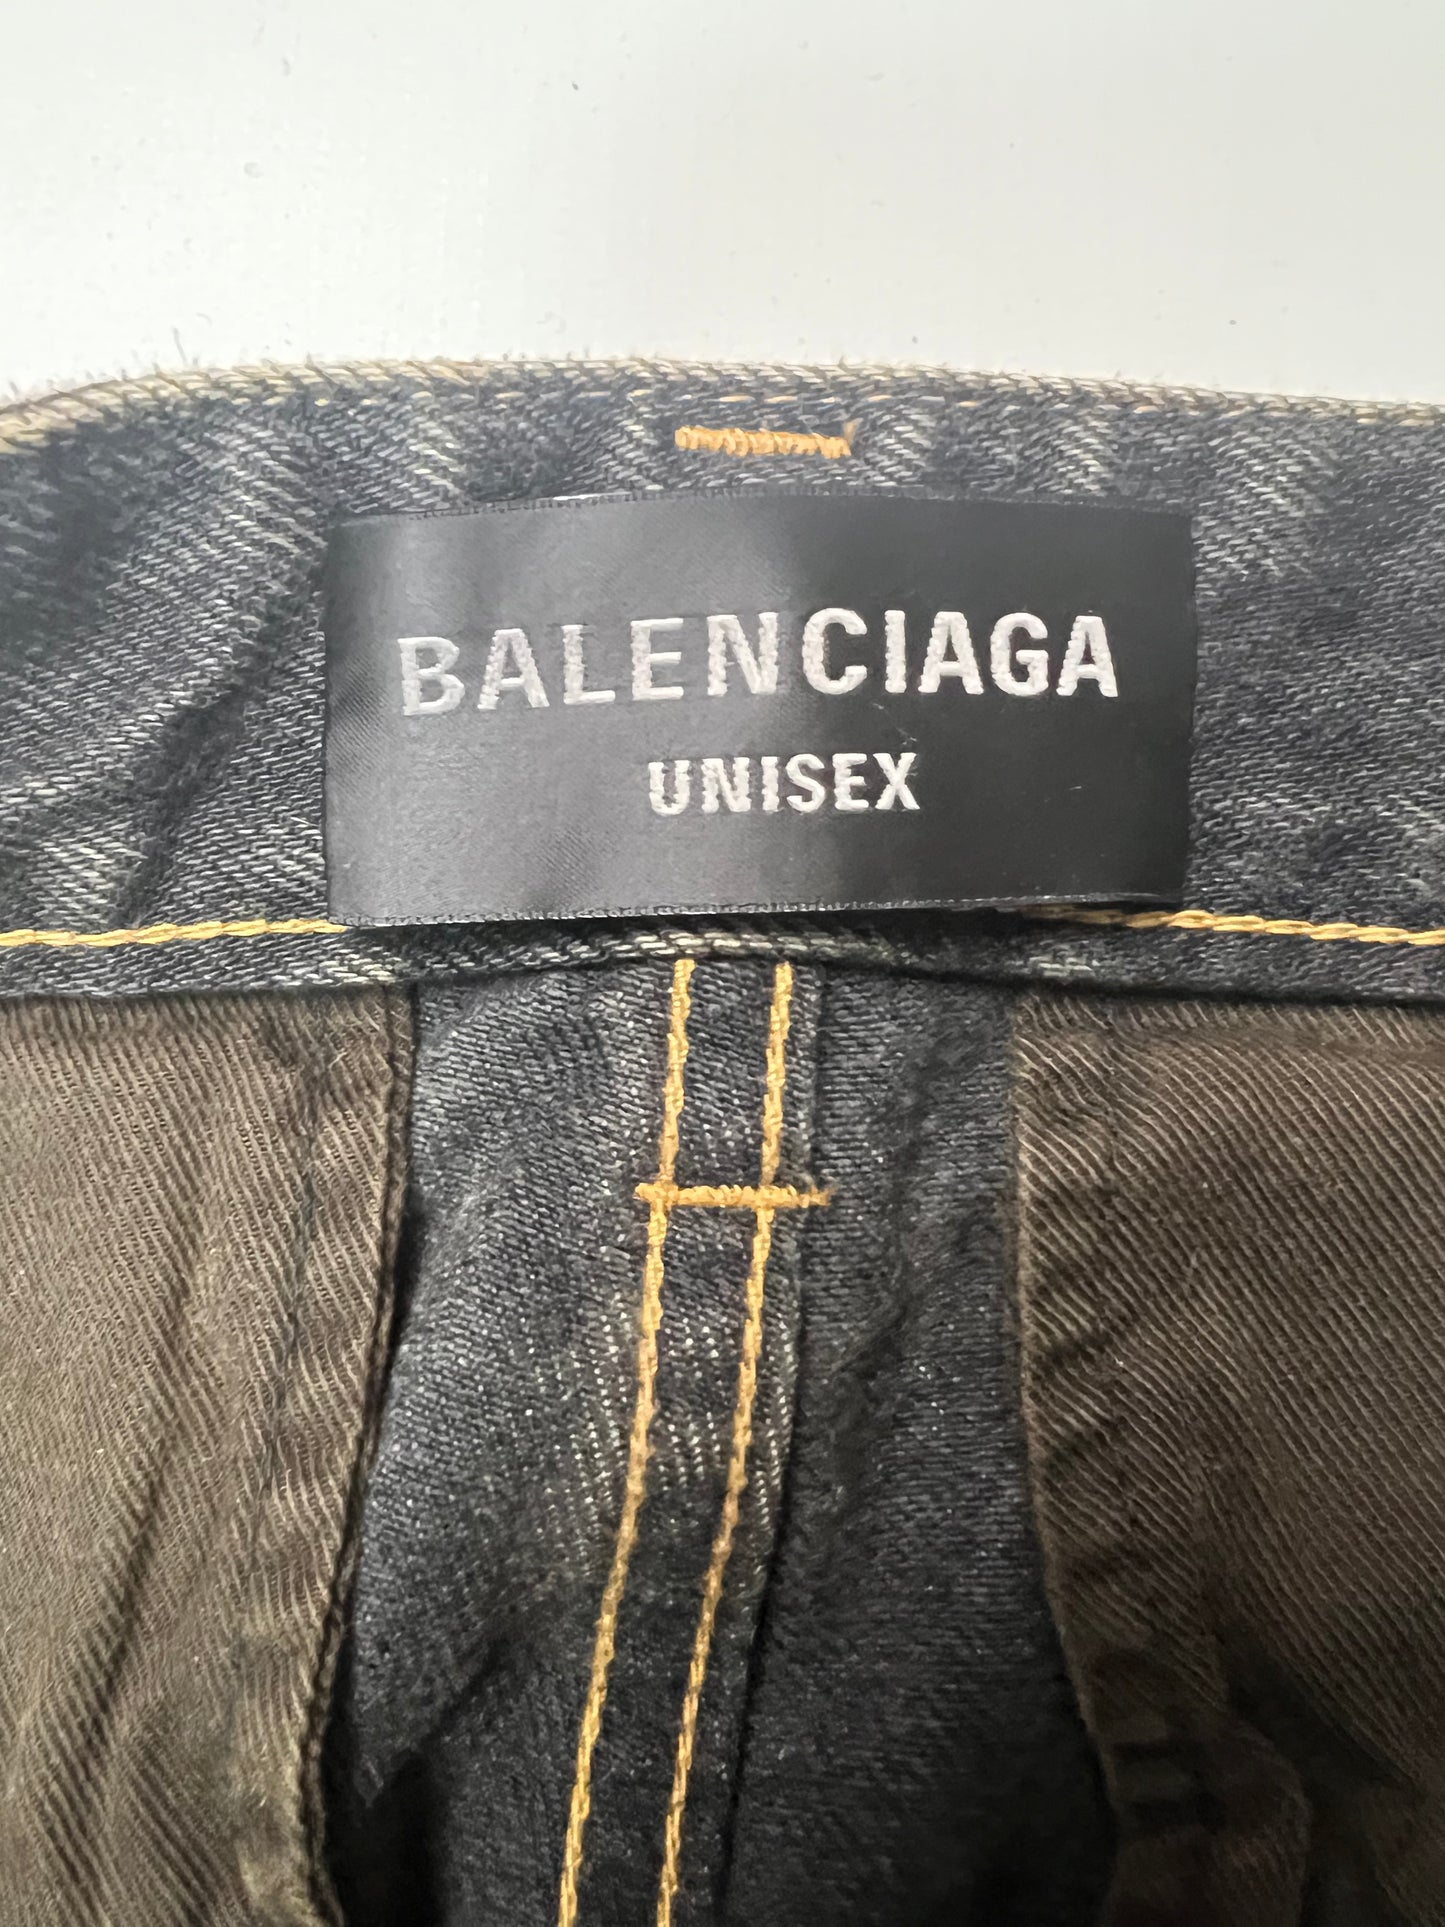 Balenciaga Japanese denim cargo Jeans in blue SZ:M